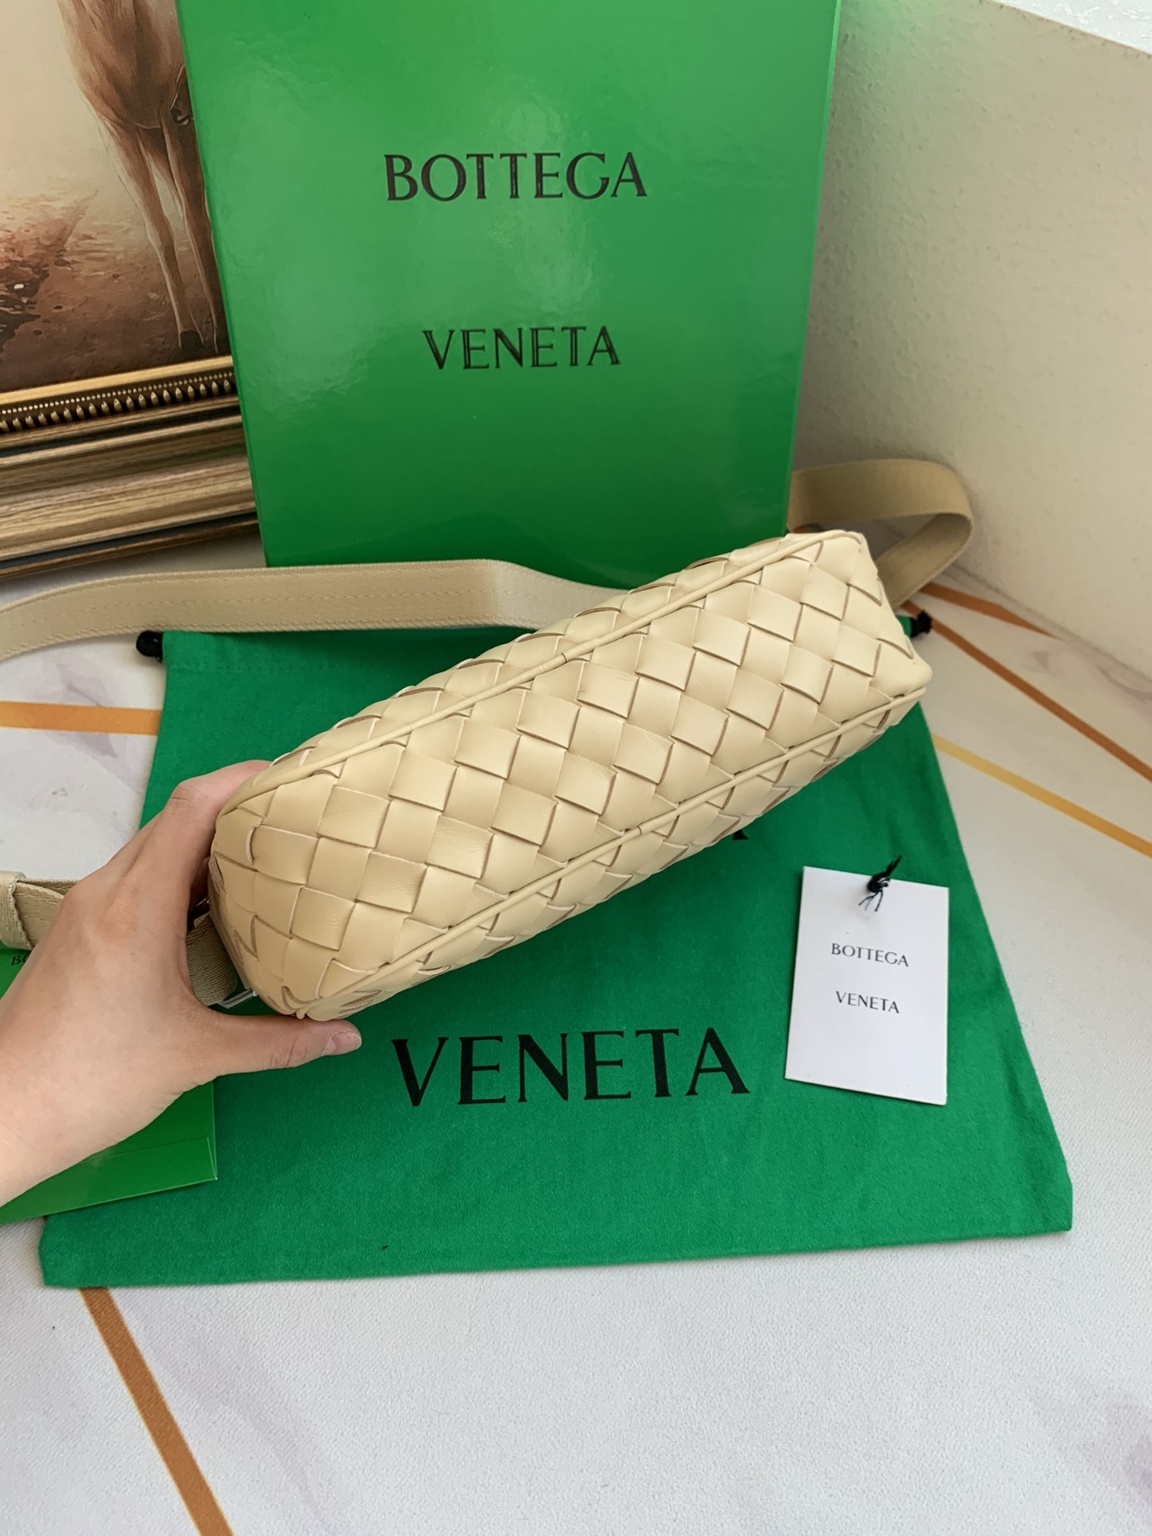 Bottega Veneta 보테가 베네타 인트레치아토 메신저백